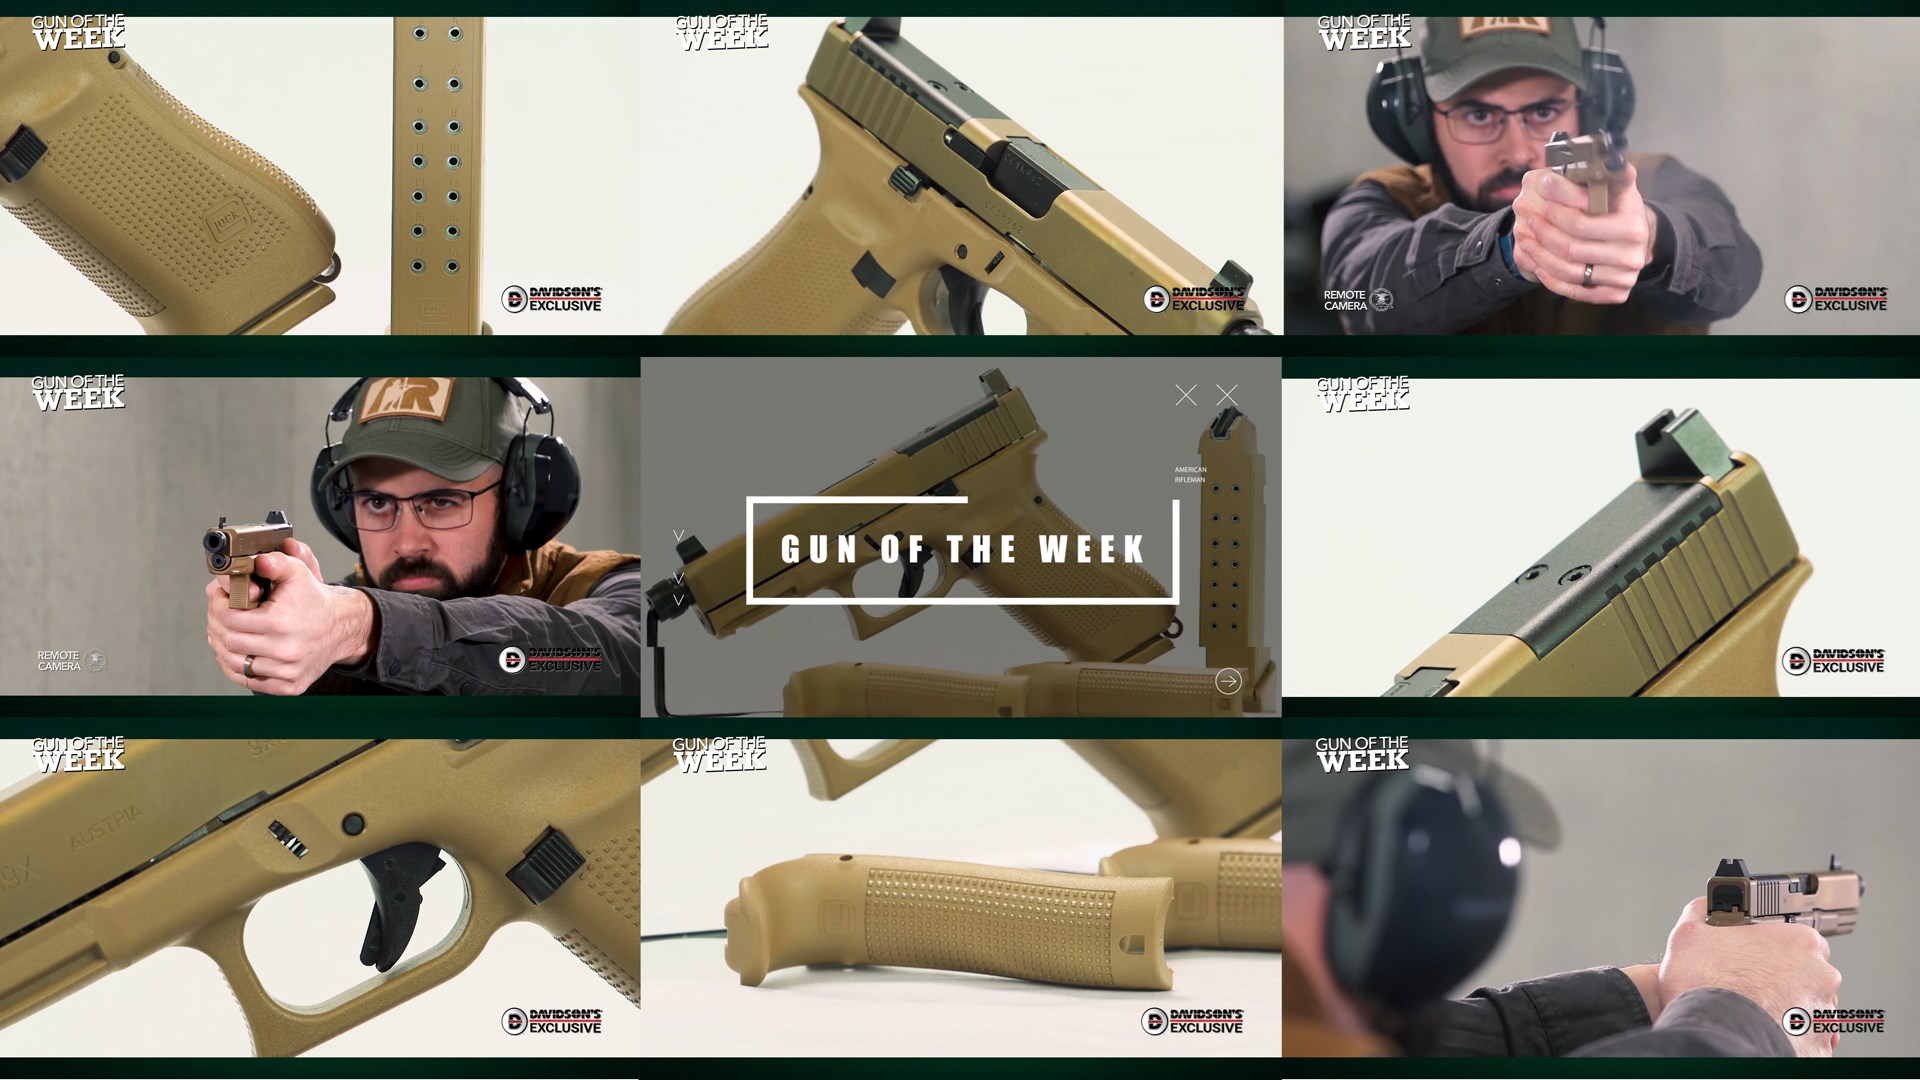 GUN OF THE WEEK txt on image tiles 9 images arrangement man shooting brown glock g19x mos threaded 9 mm pistol